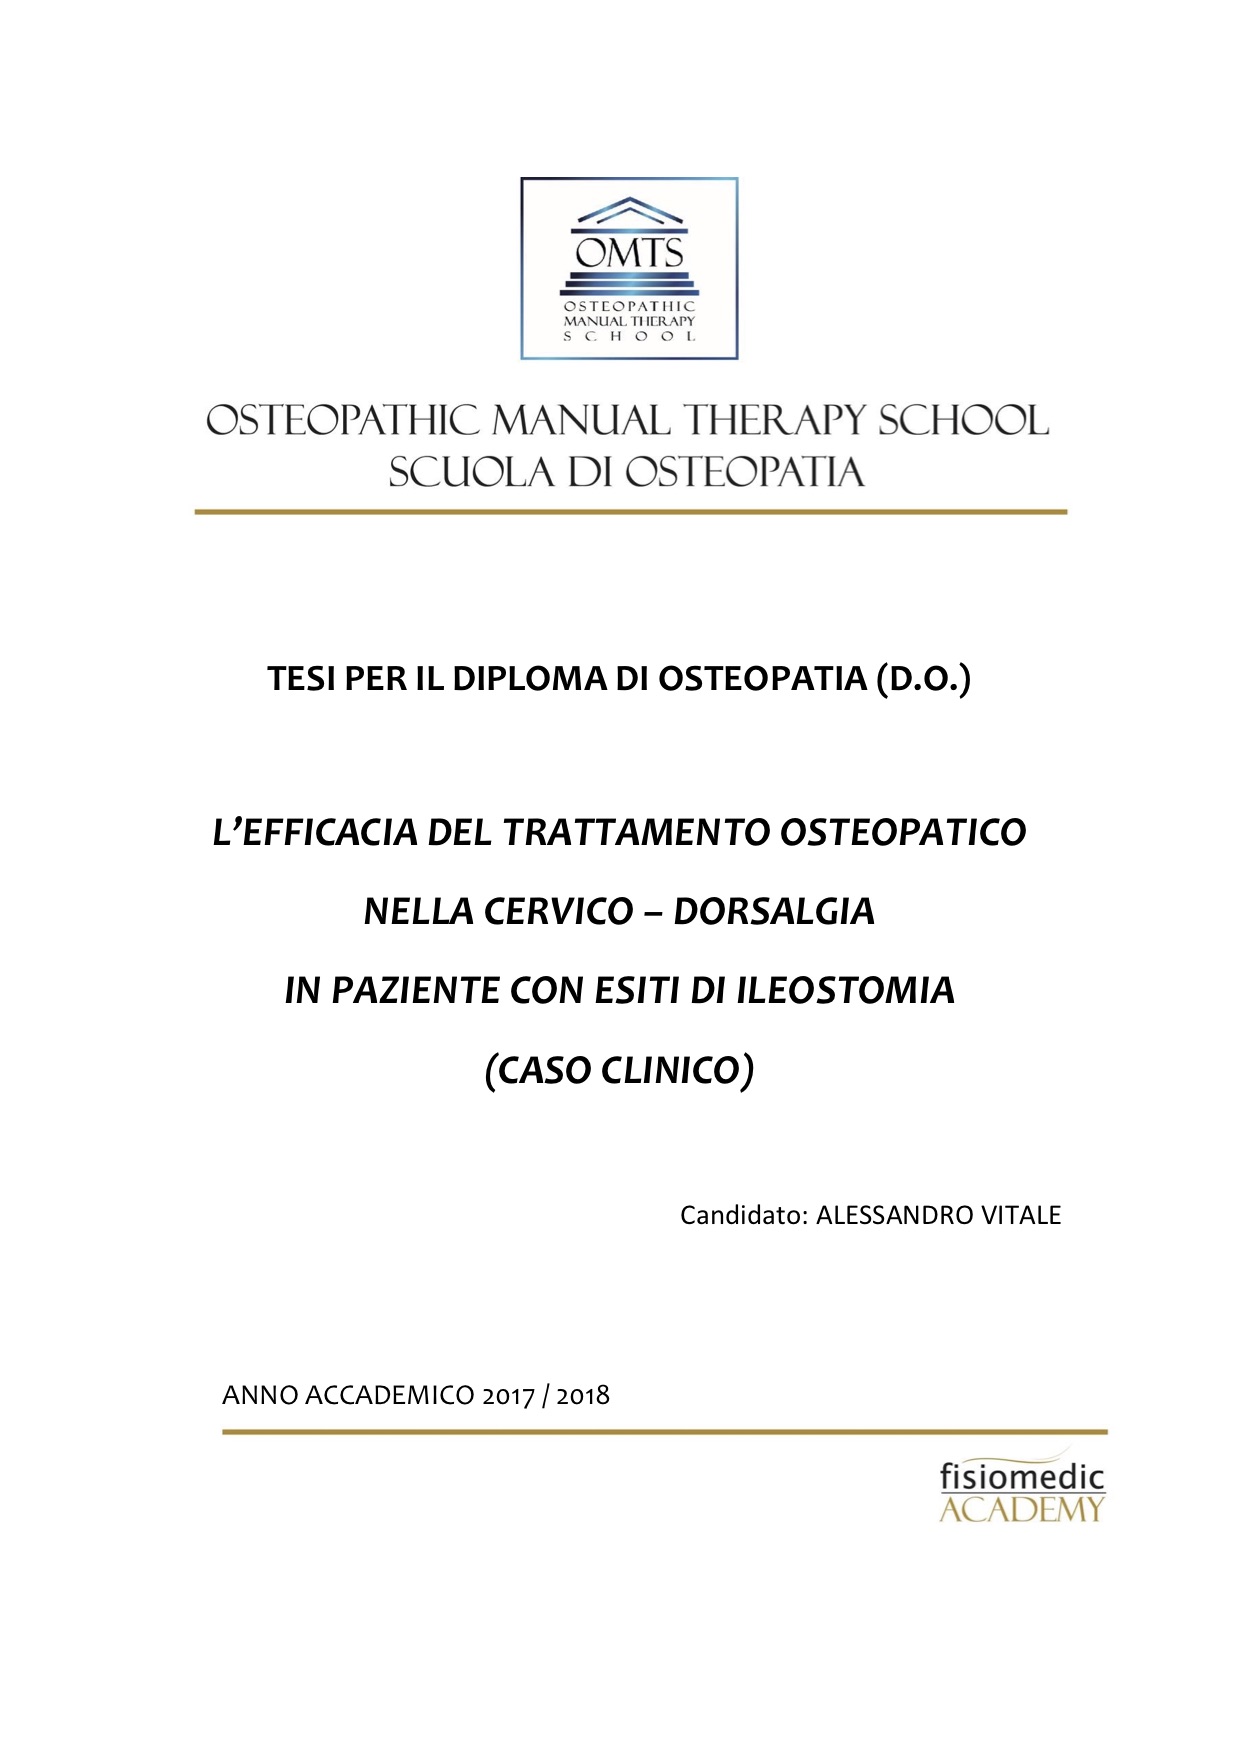 Alessandro Vitale Tesi Diploma Osteopatia 2018